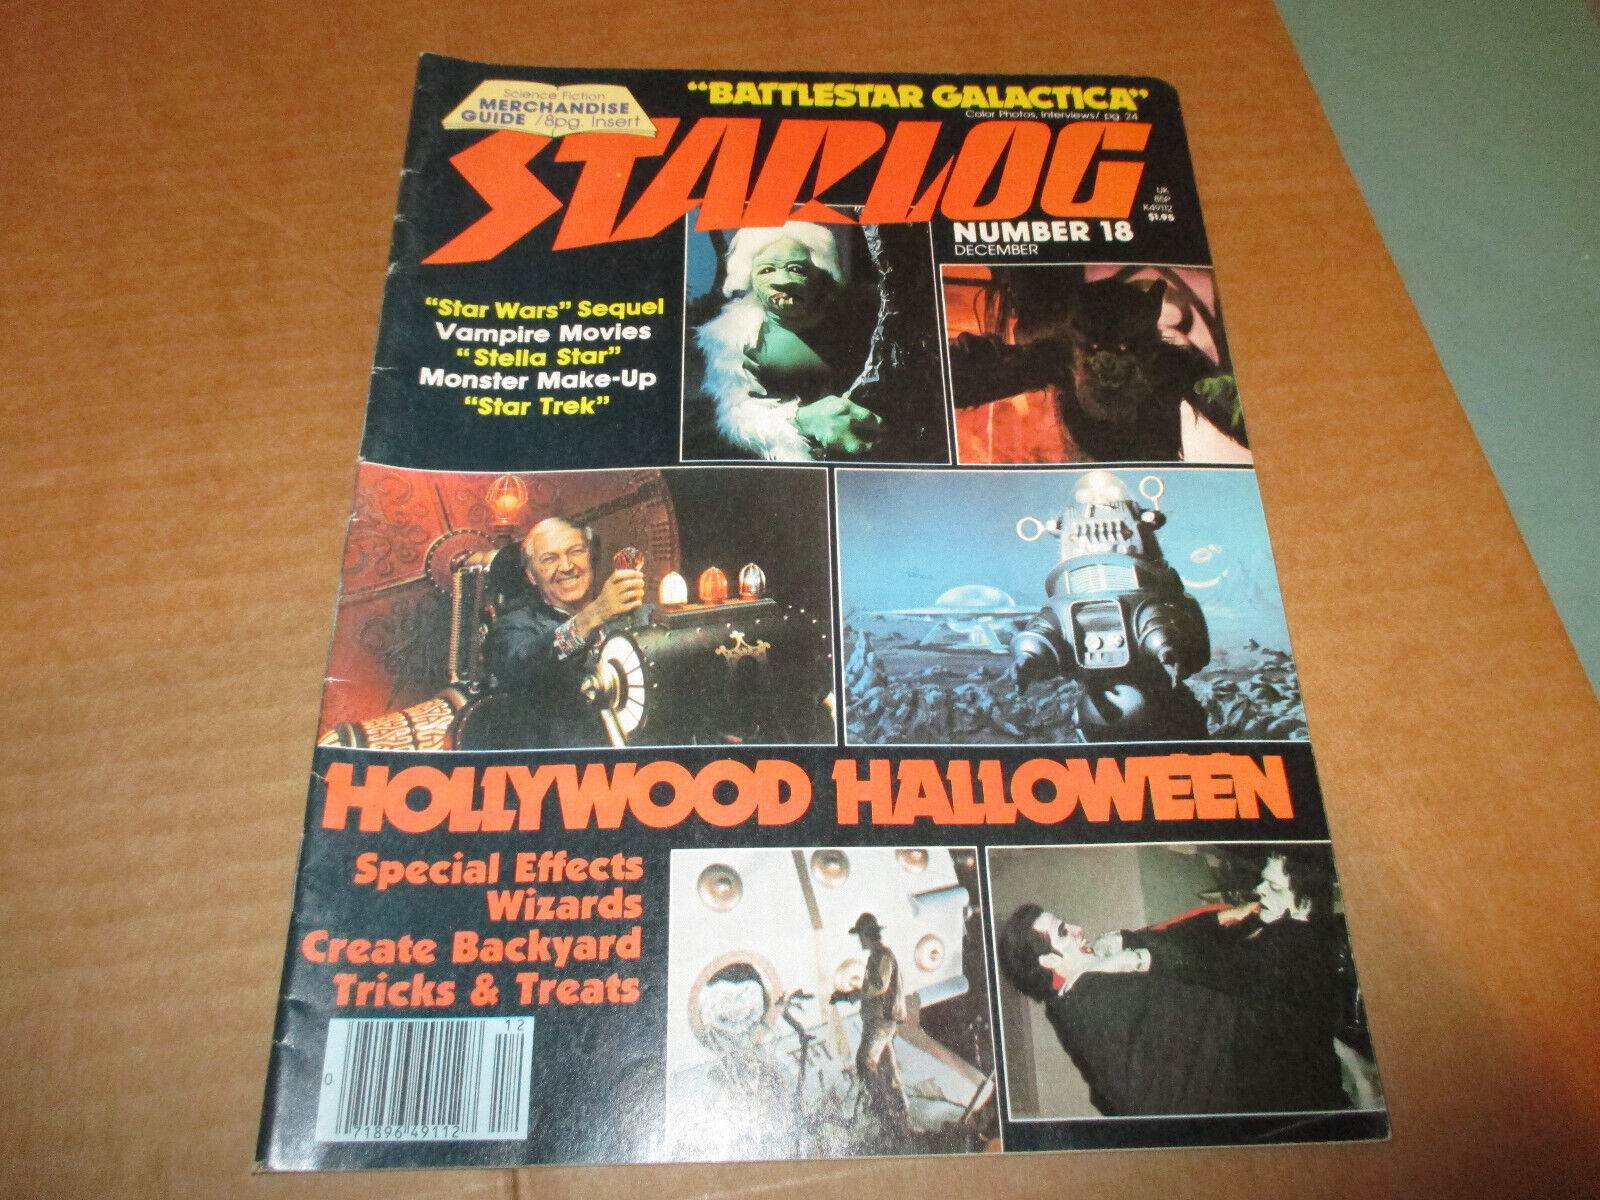 Starlog Magazine #18 December 1978 Hollywood Halloween, Star Trek Make-Up